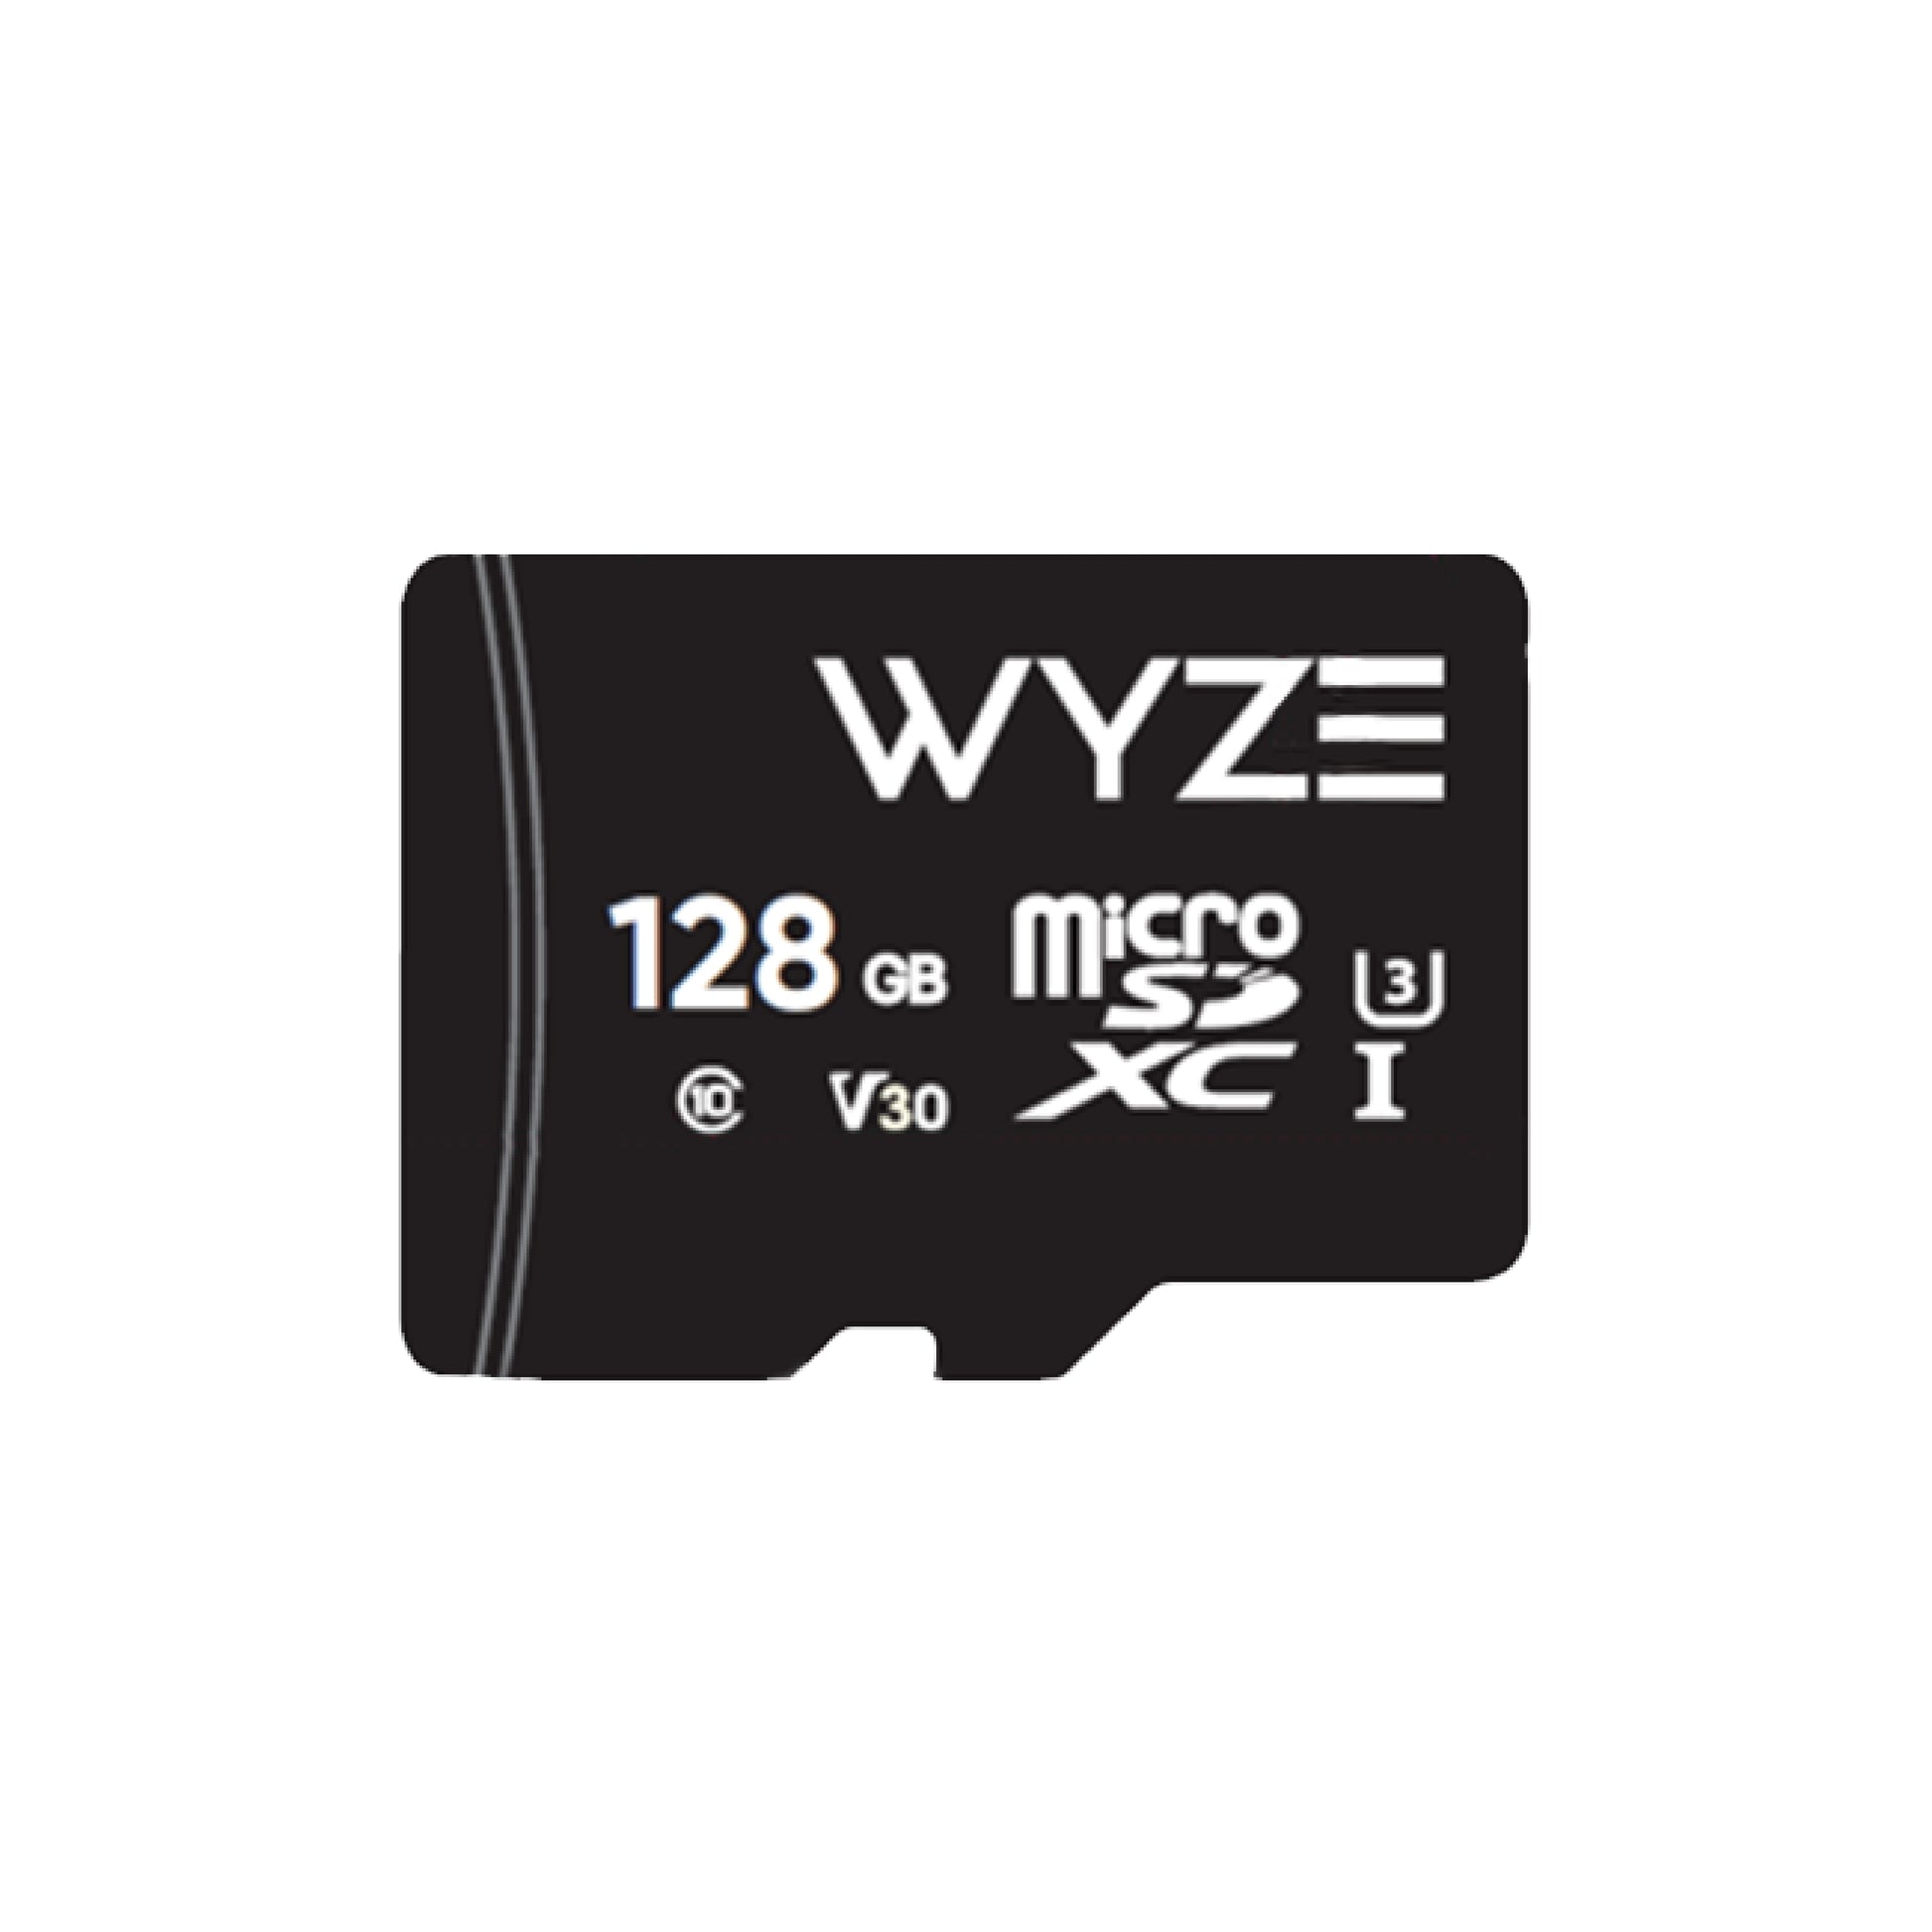 Carte micro sd SDXC - 256 GB